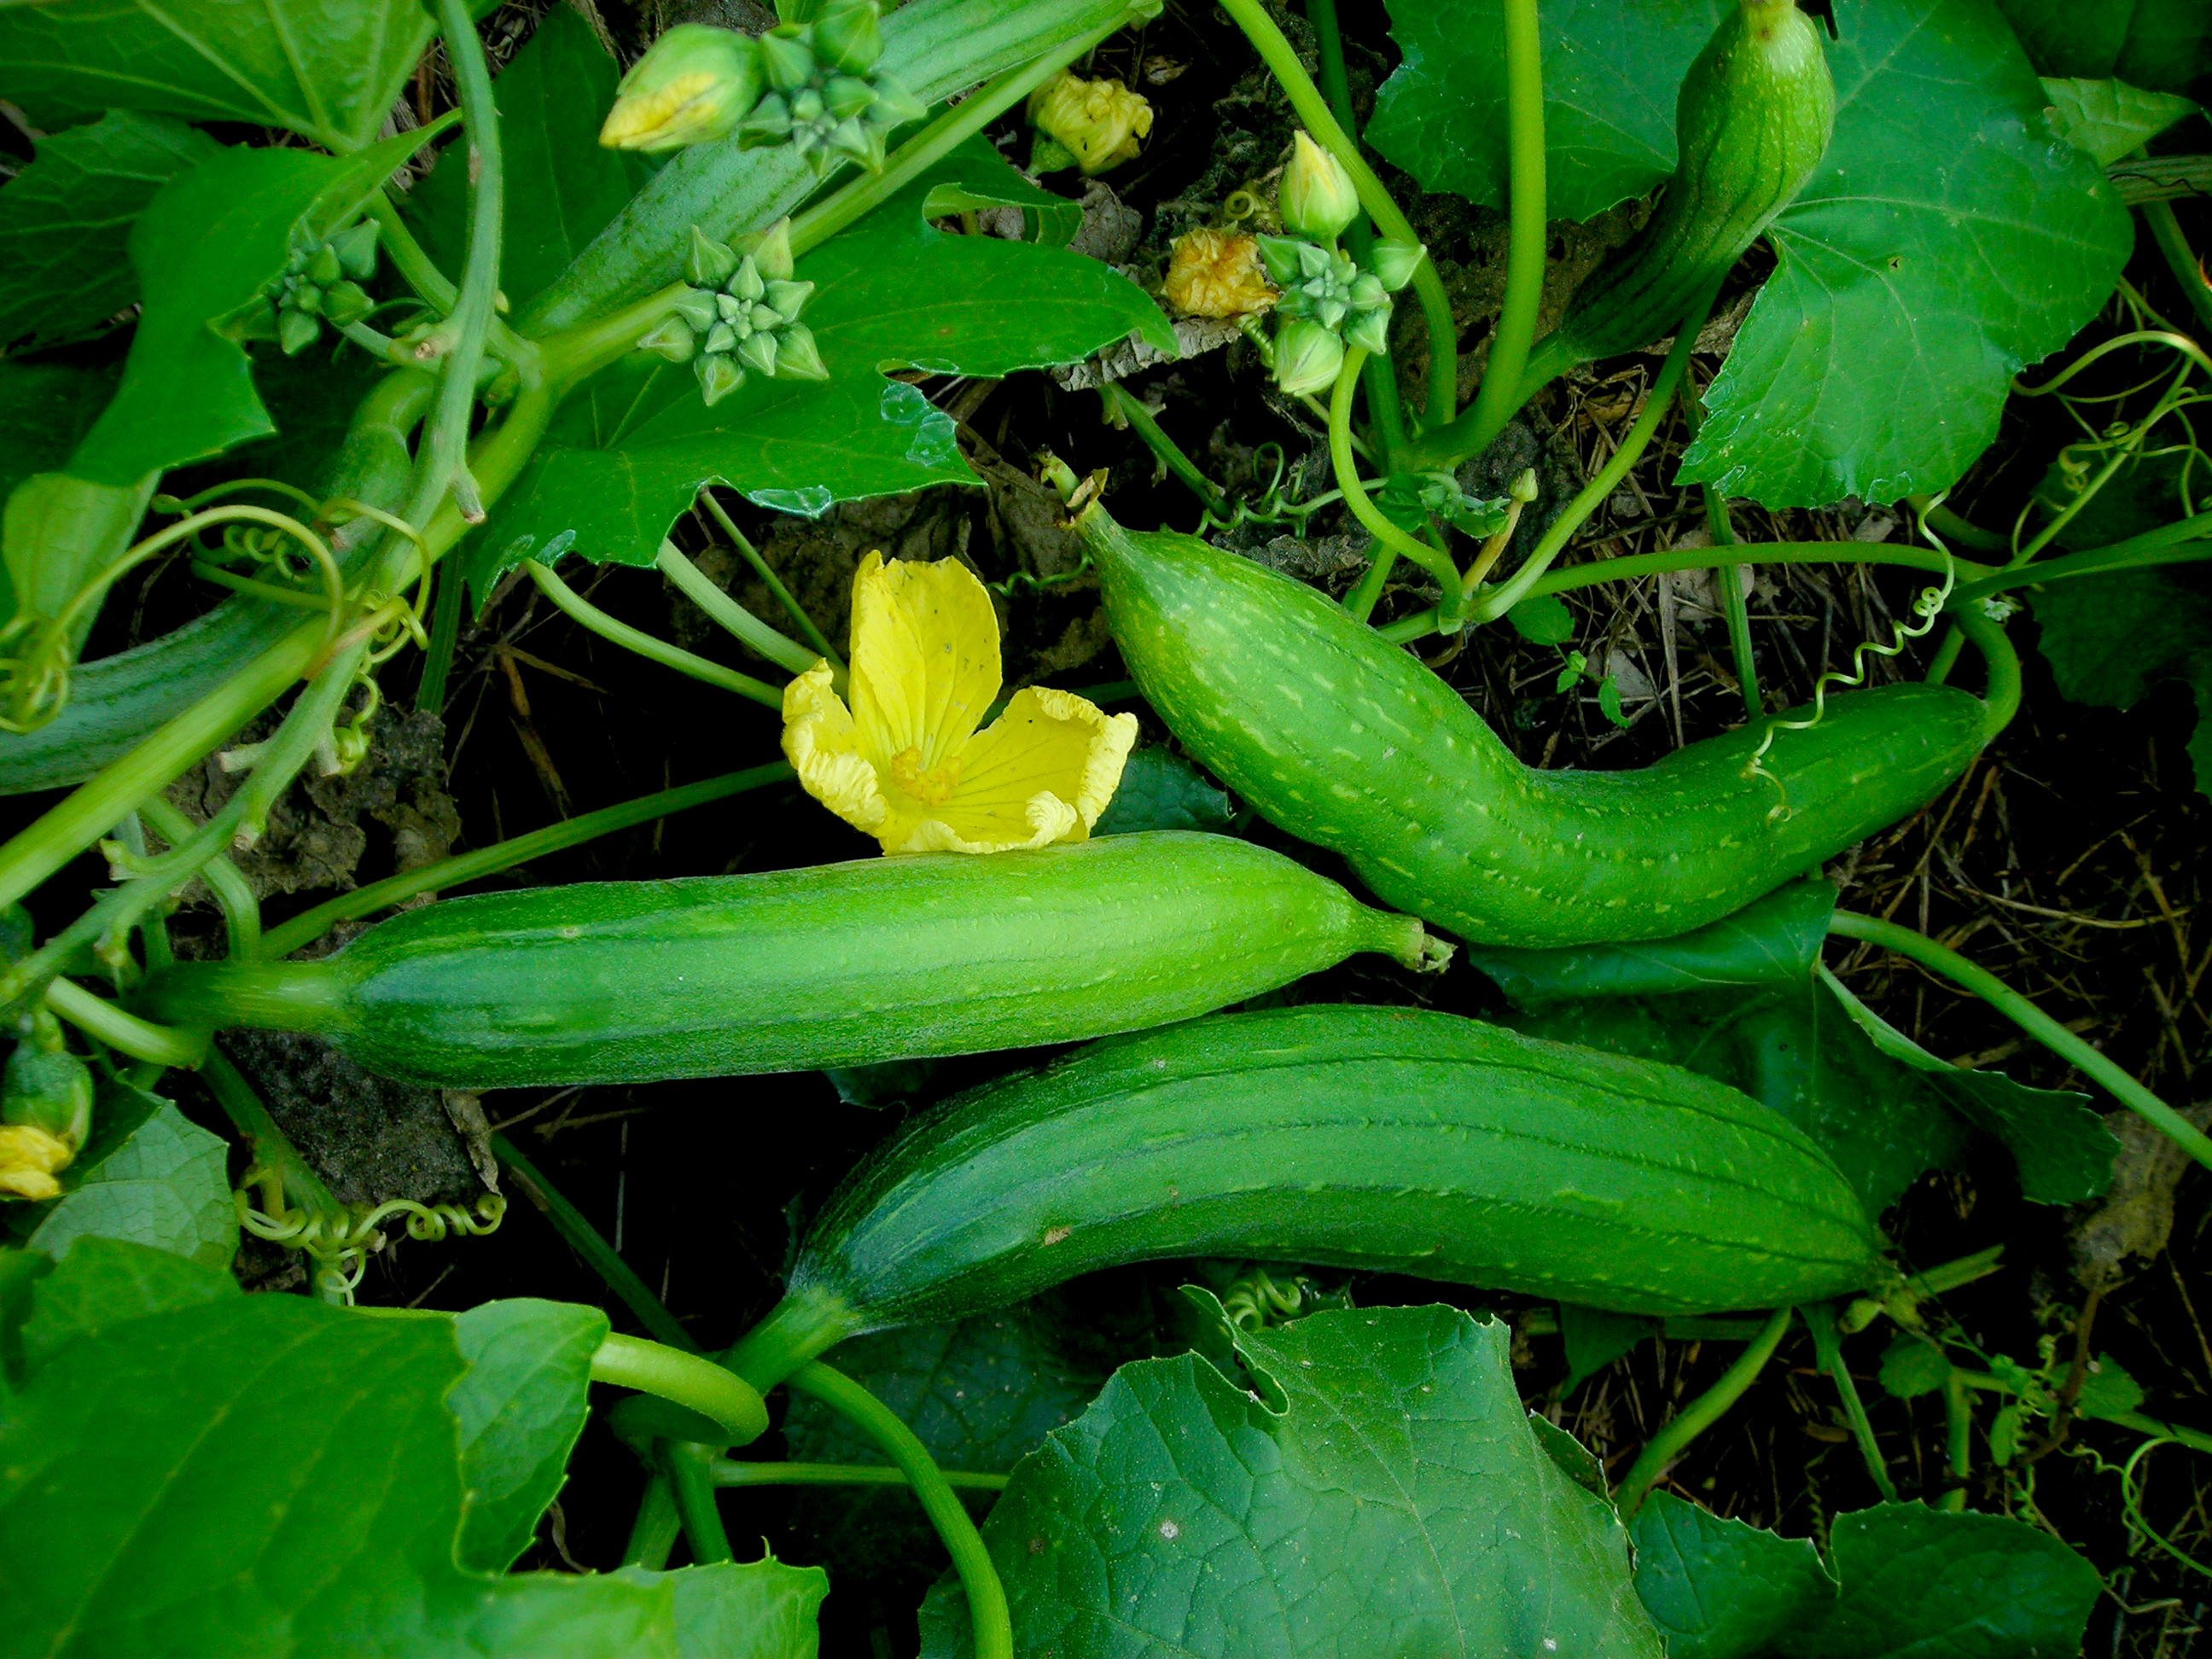 Luffa Edible Gourd, 3 g : Southern Exposure Seed Exchange, Saving the